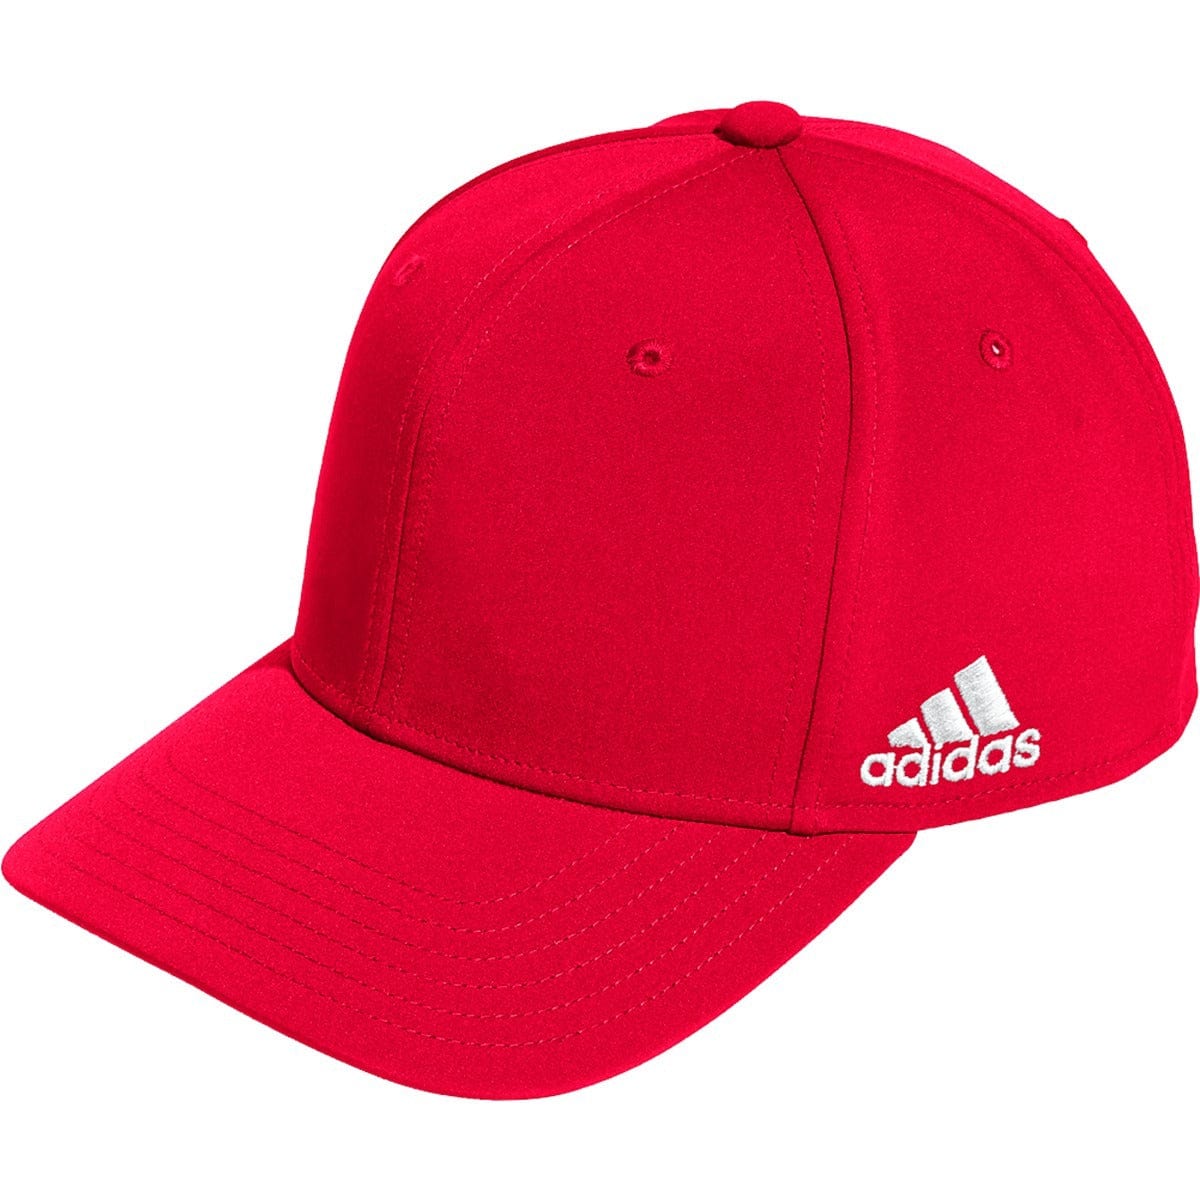 adidas Headwear Adjustable / Power Red adidas - Structured Snapback Cap